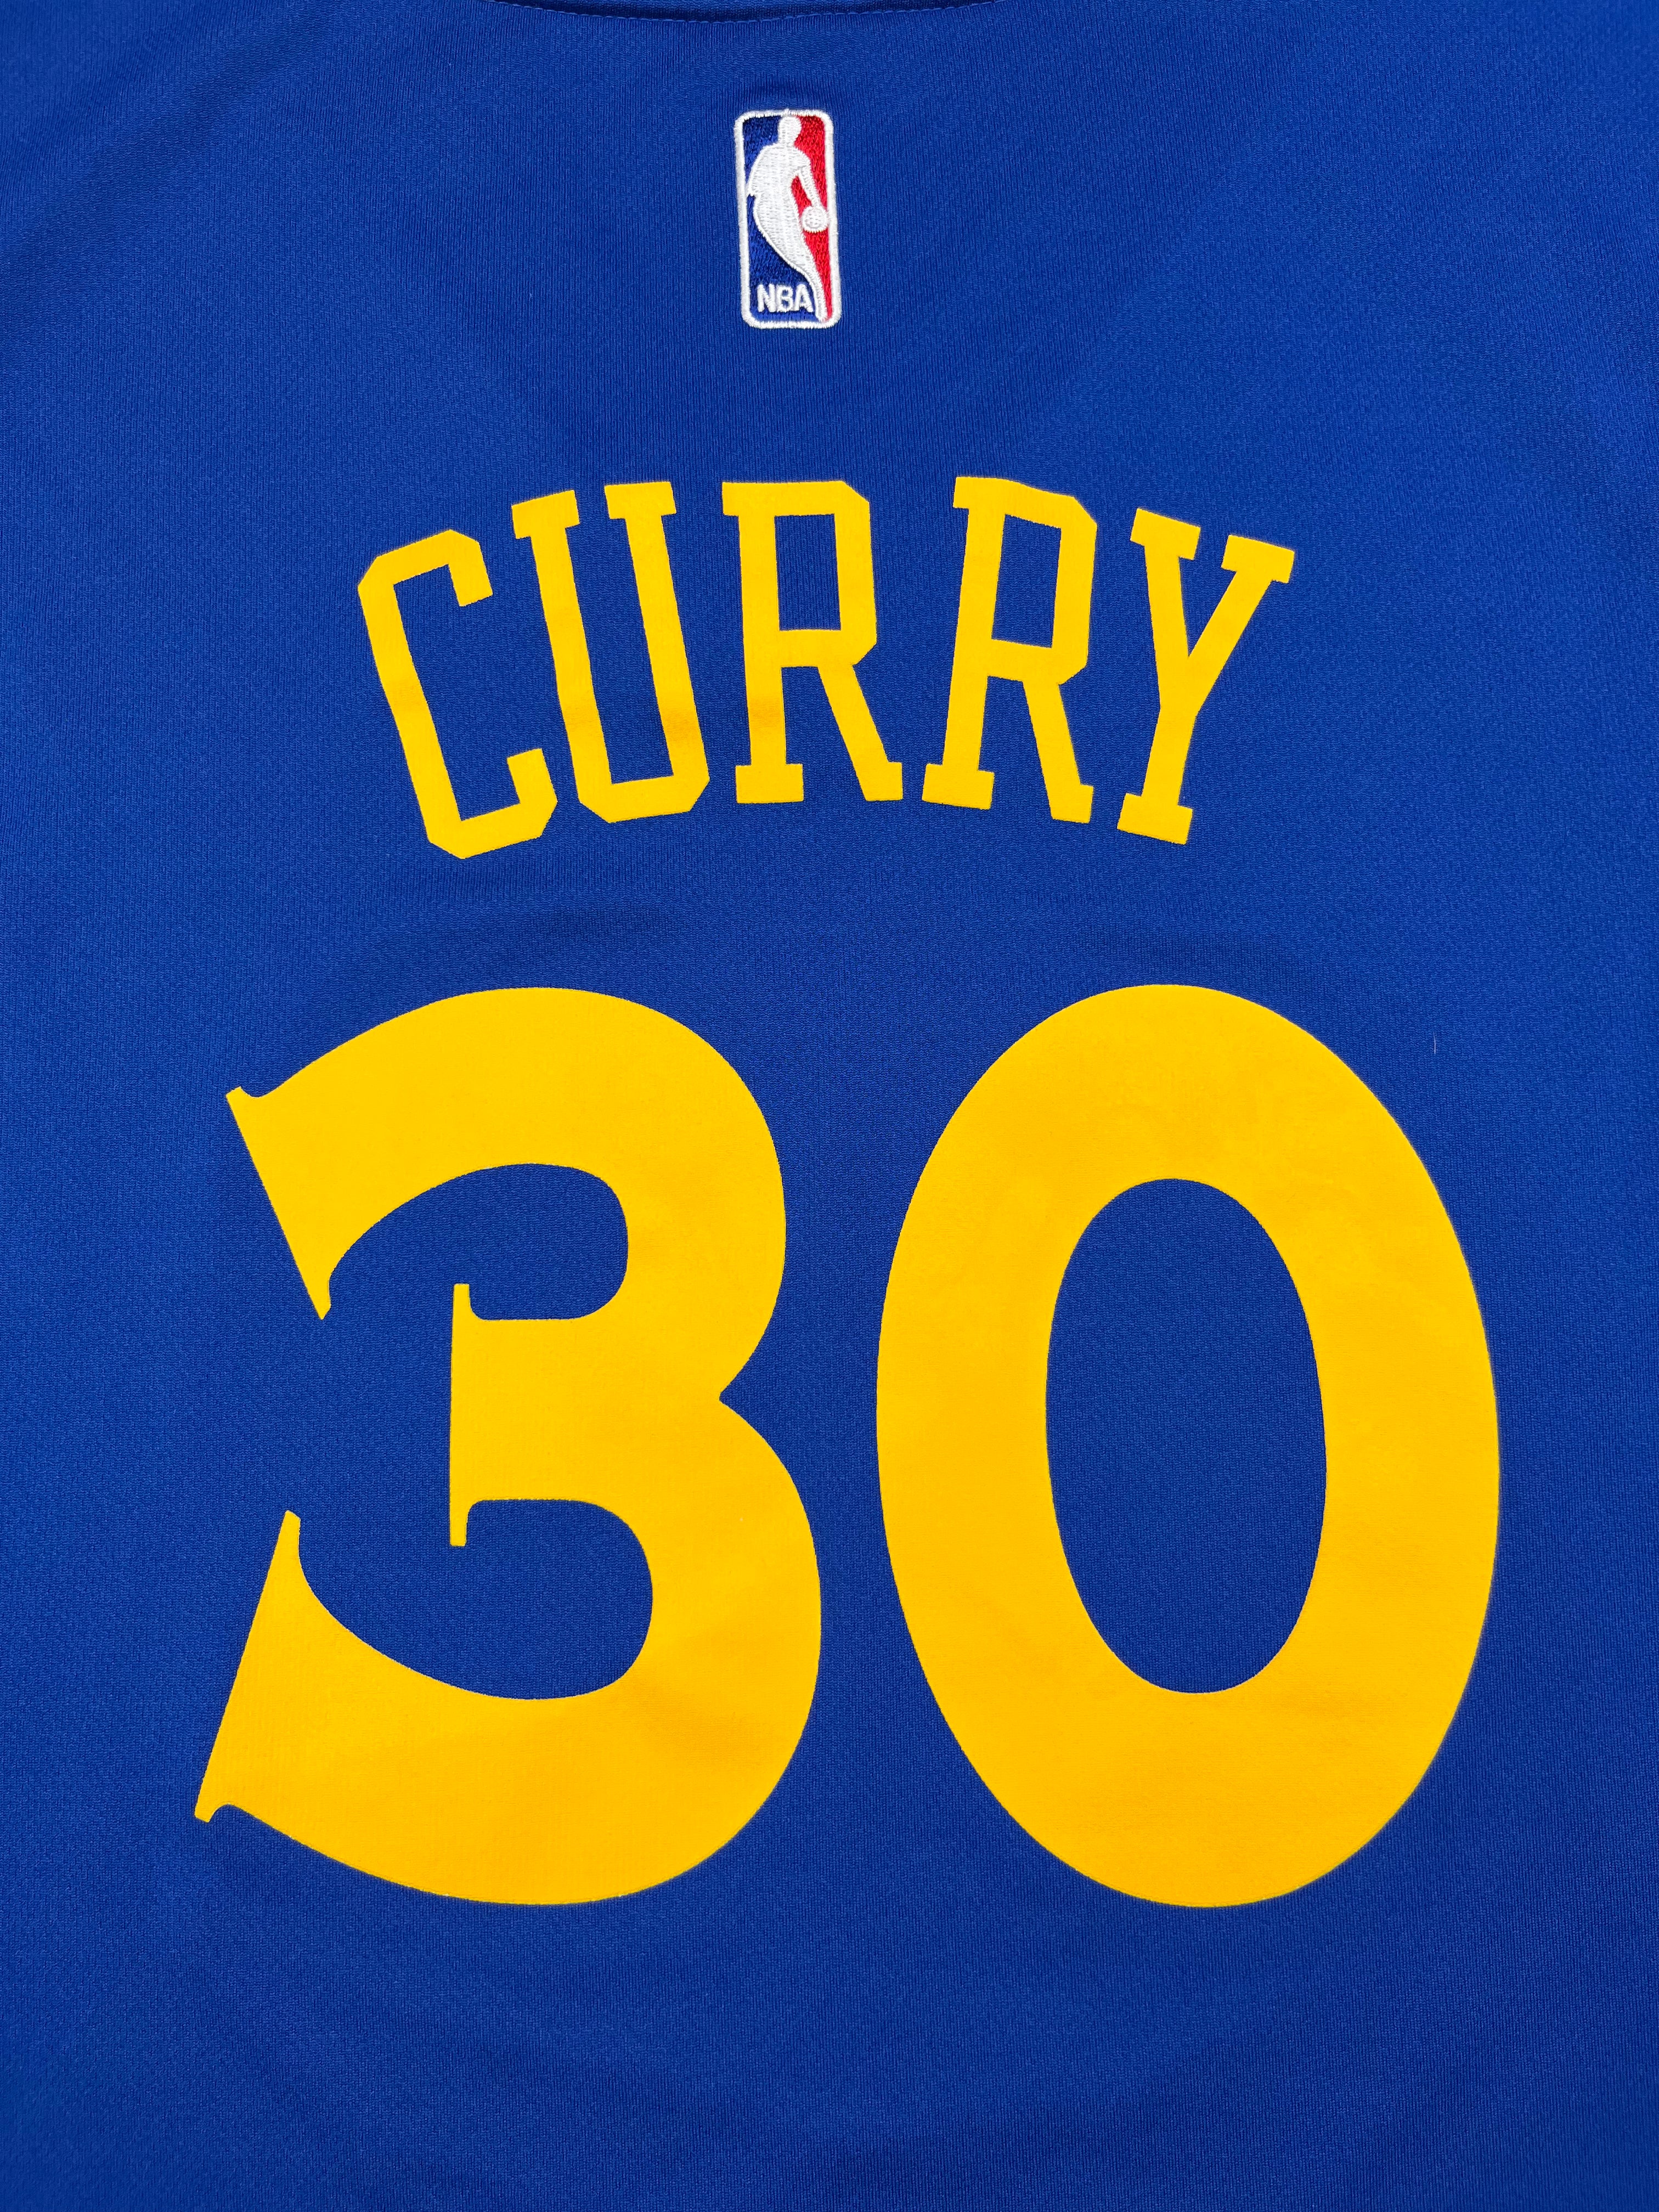 2014-17 Golden State Warriors Adidas camiseta de carretera Curry # 30 (M) 9/10